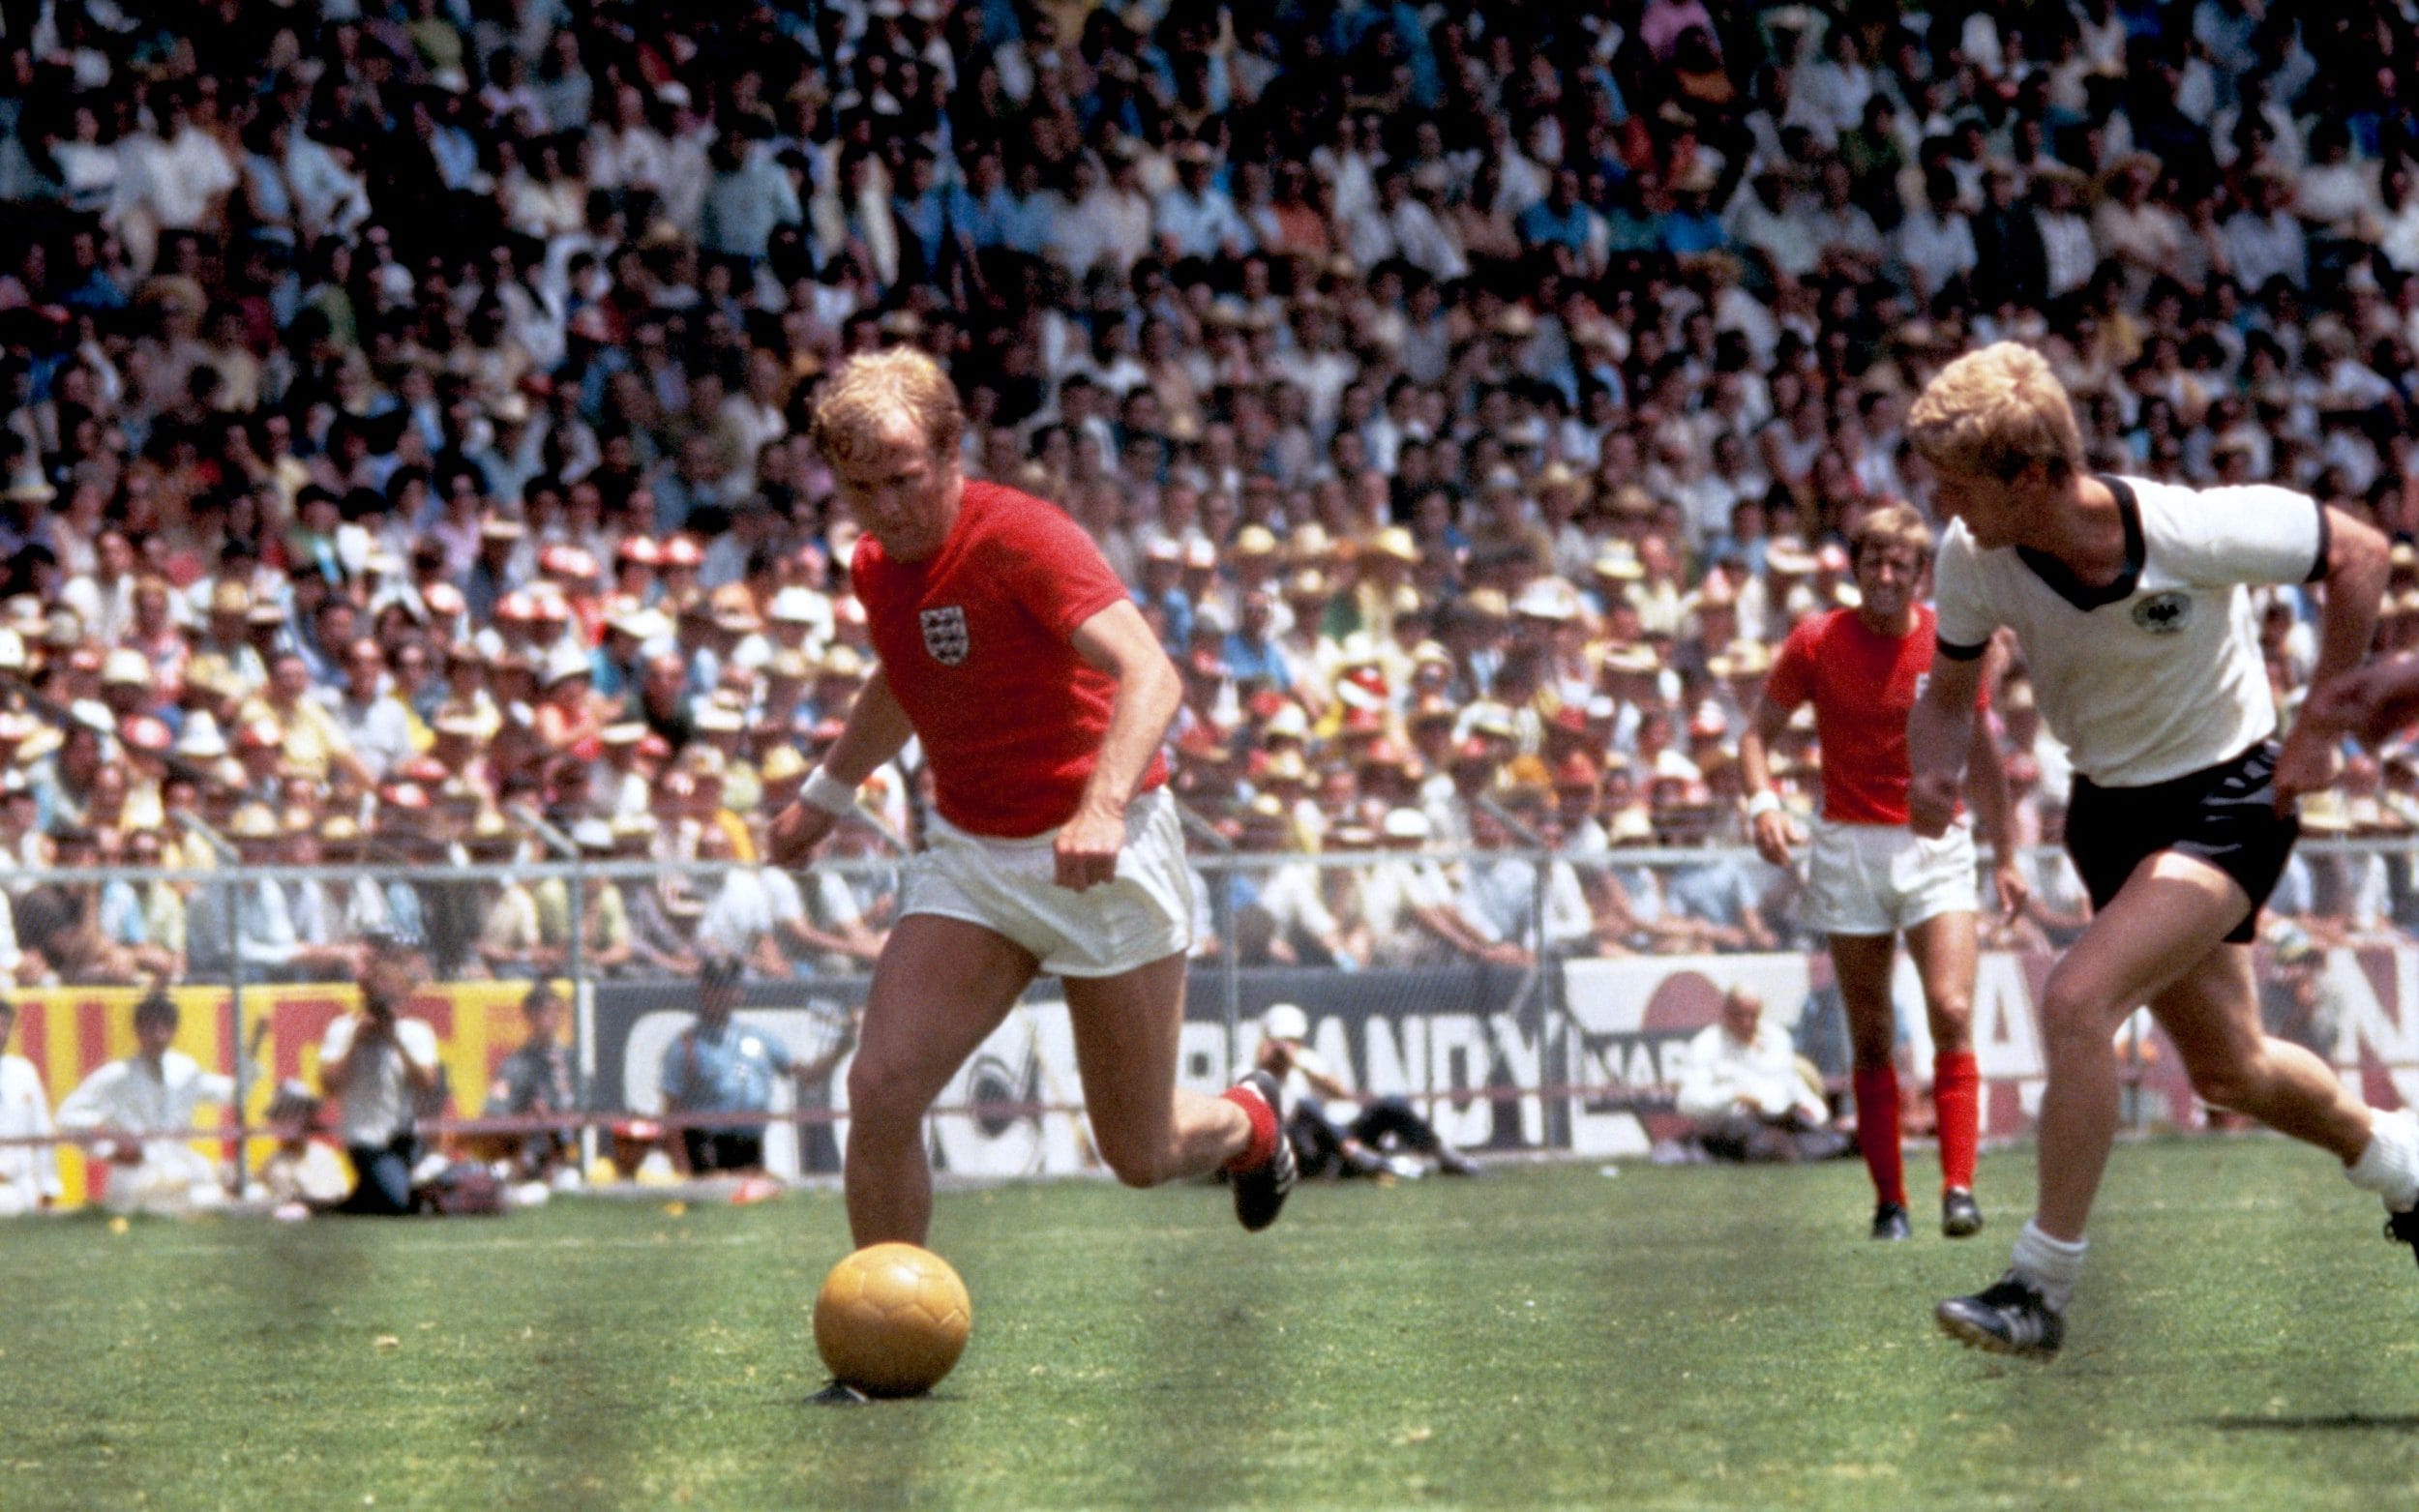 1970 World Cup / Germany / England / انگلیس / آلمان / جام جهانی 1970